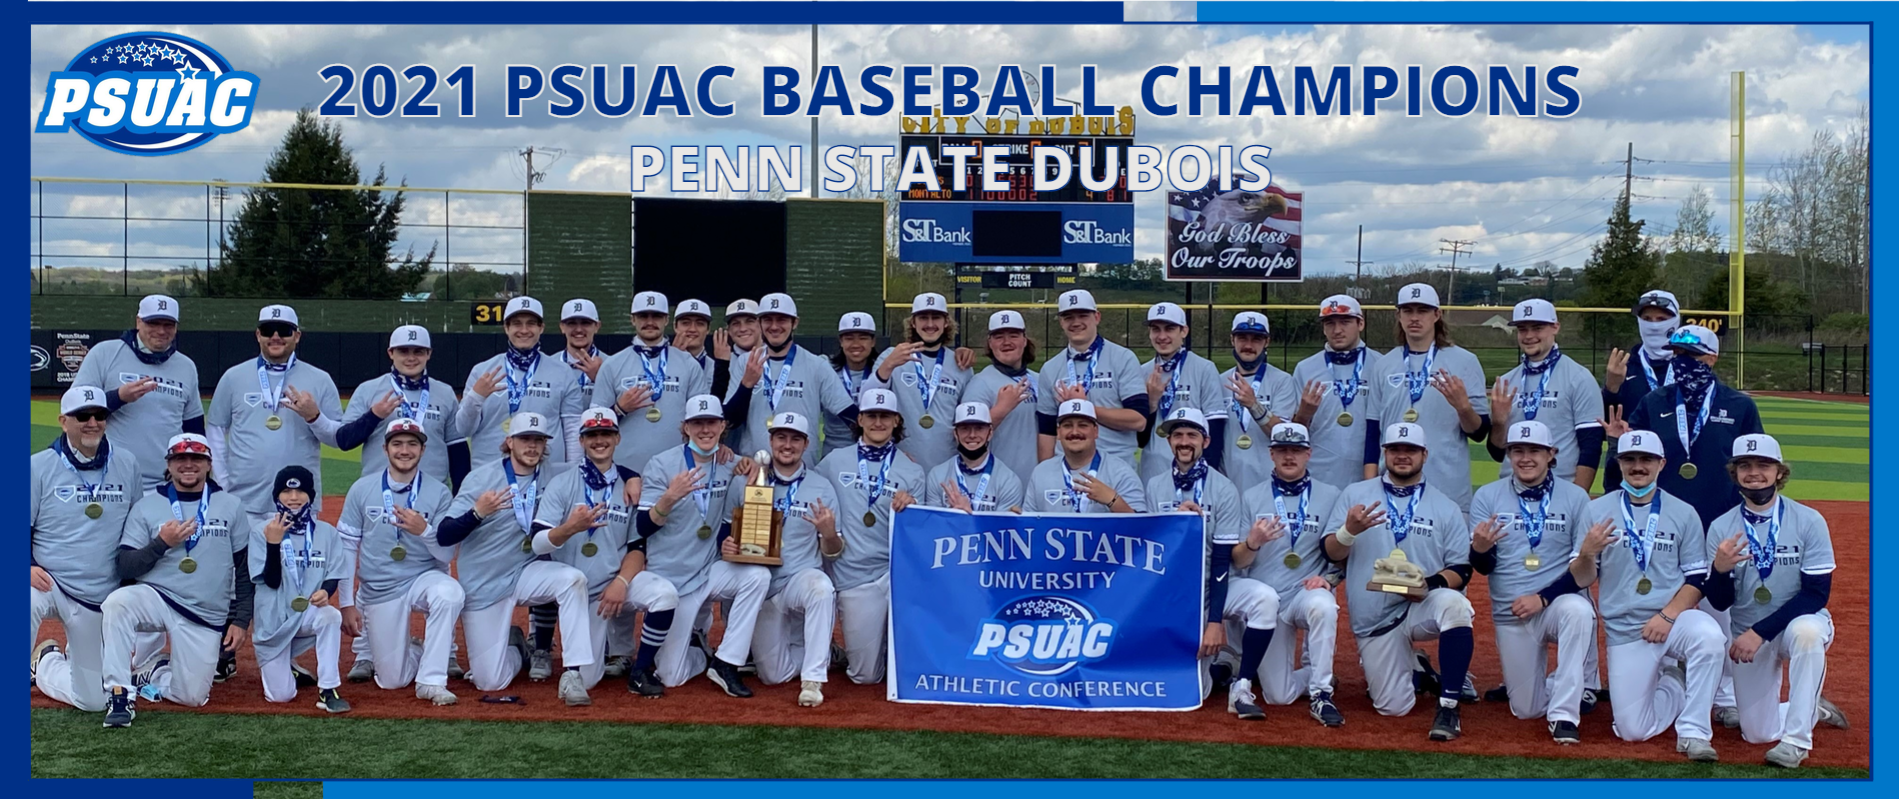 Penn State DuBois won the 2021 PSUAC Baseball Championship on May 11.